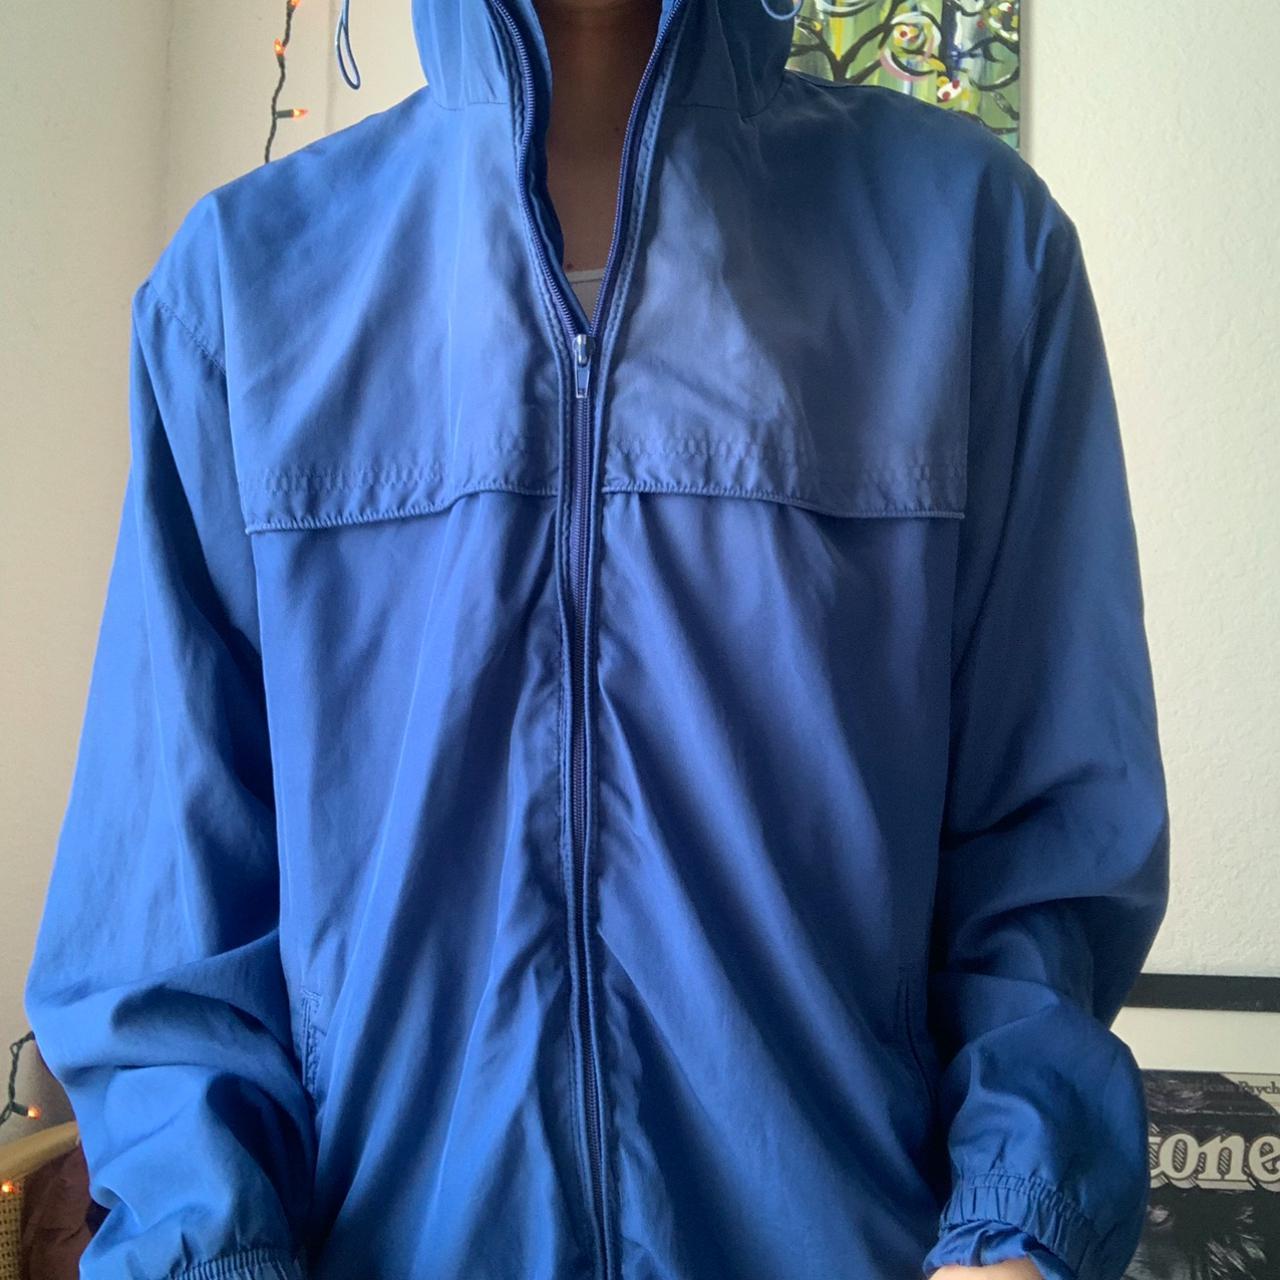 st johns bay blue rain jacket size: large some... - Depop